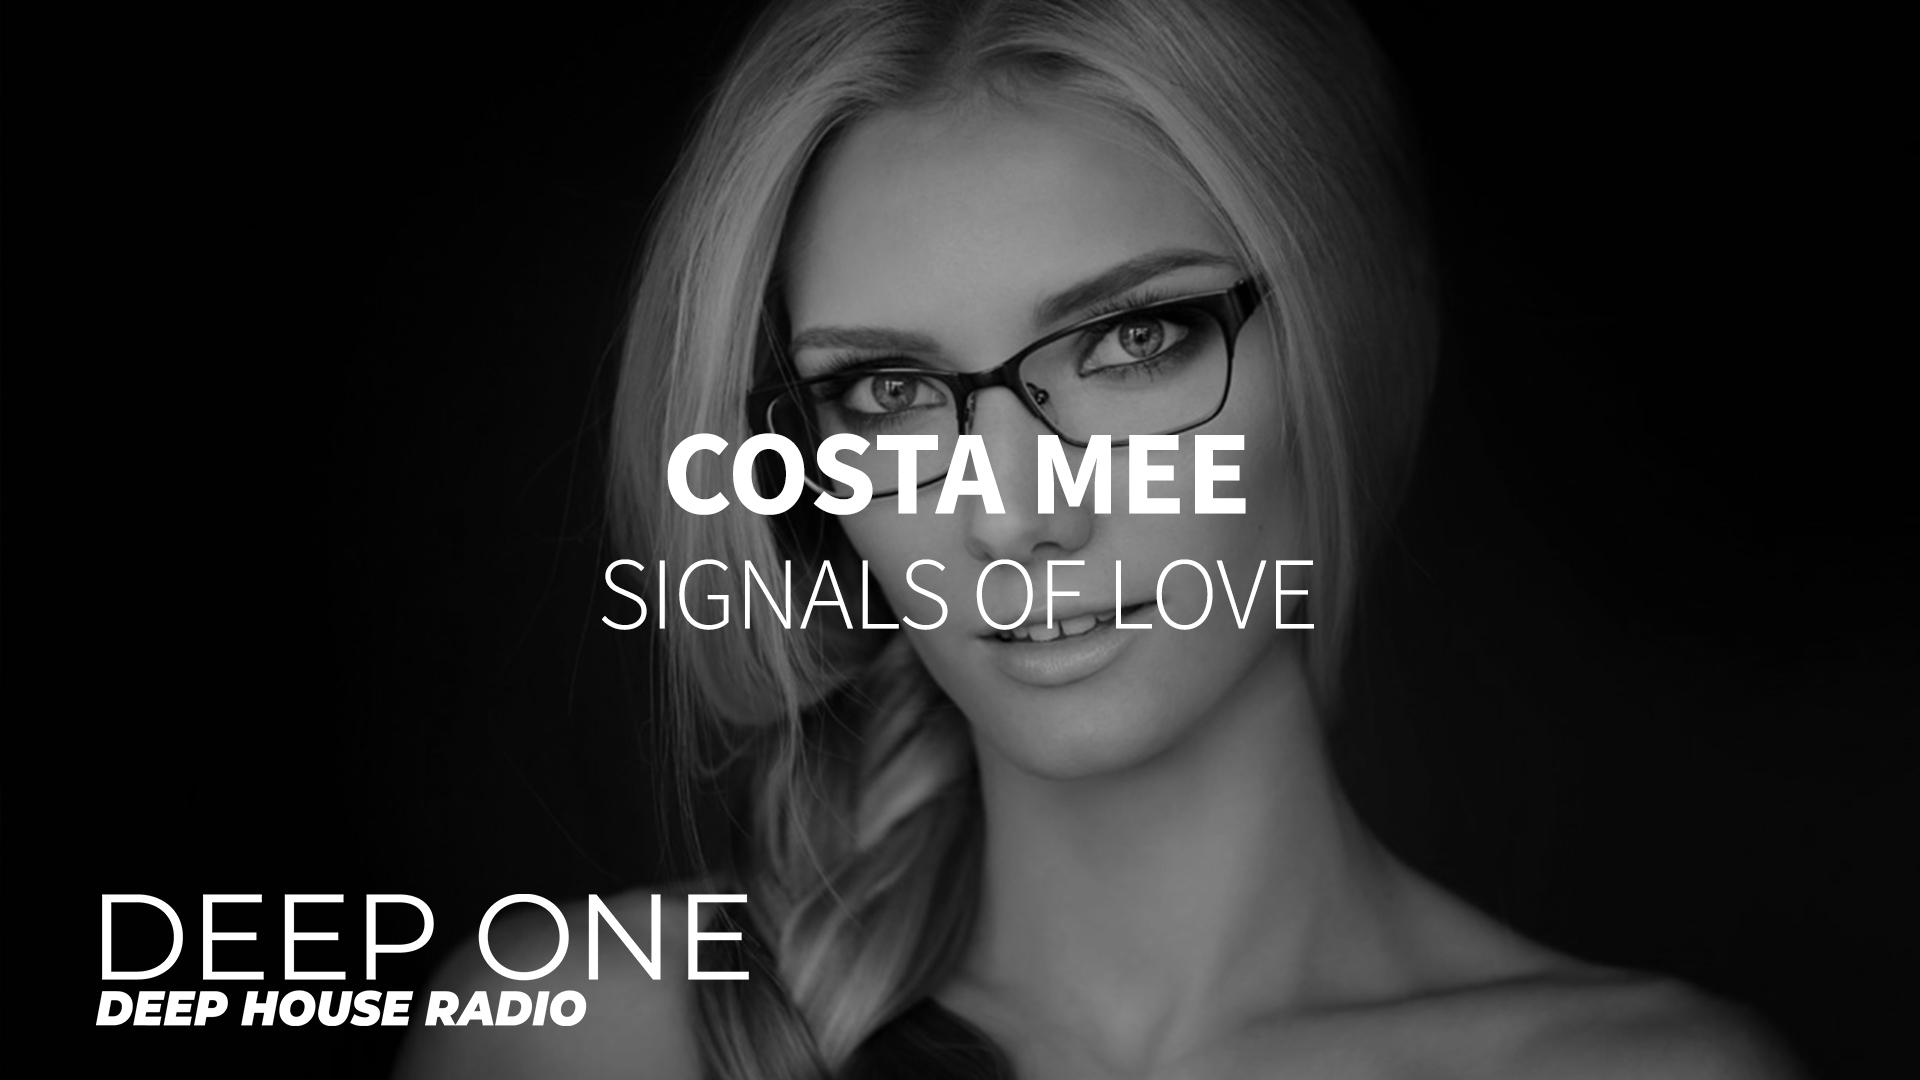 Costa mee rain. Costa mee исполнительница. Радио Deep one. "Costa mee" && ( исполнитель | группа | музыка | Music | Band | artist ) && (фото | photo). Costa mee loving you.